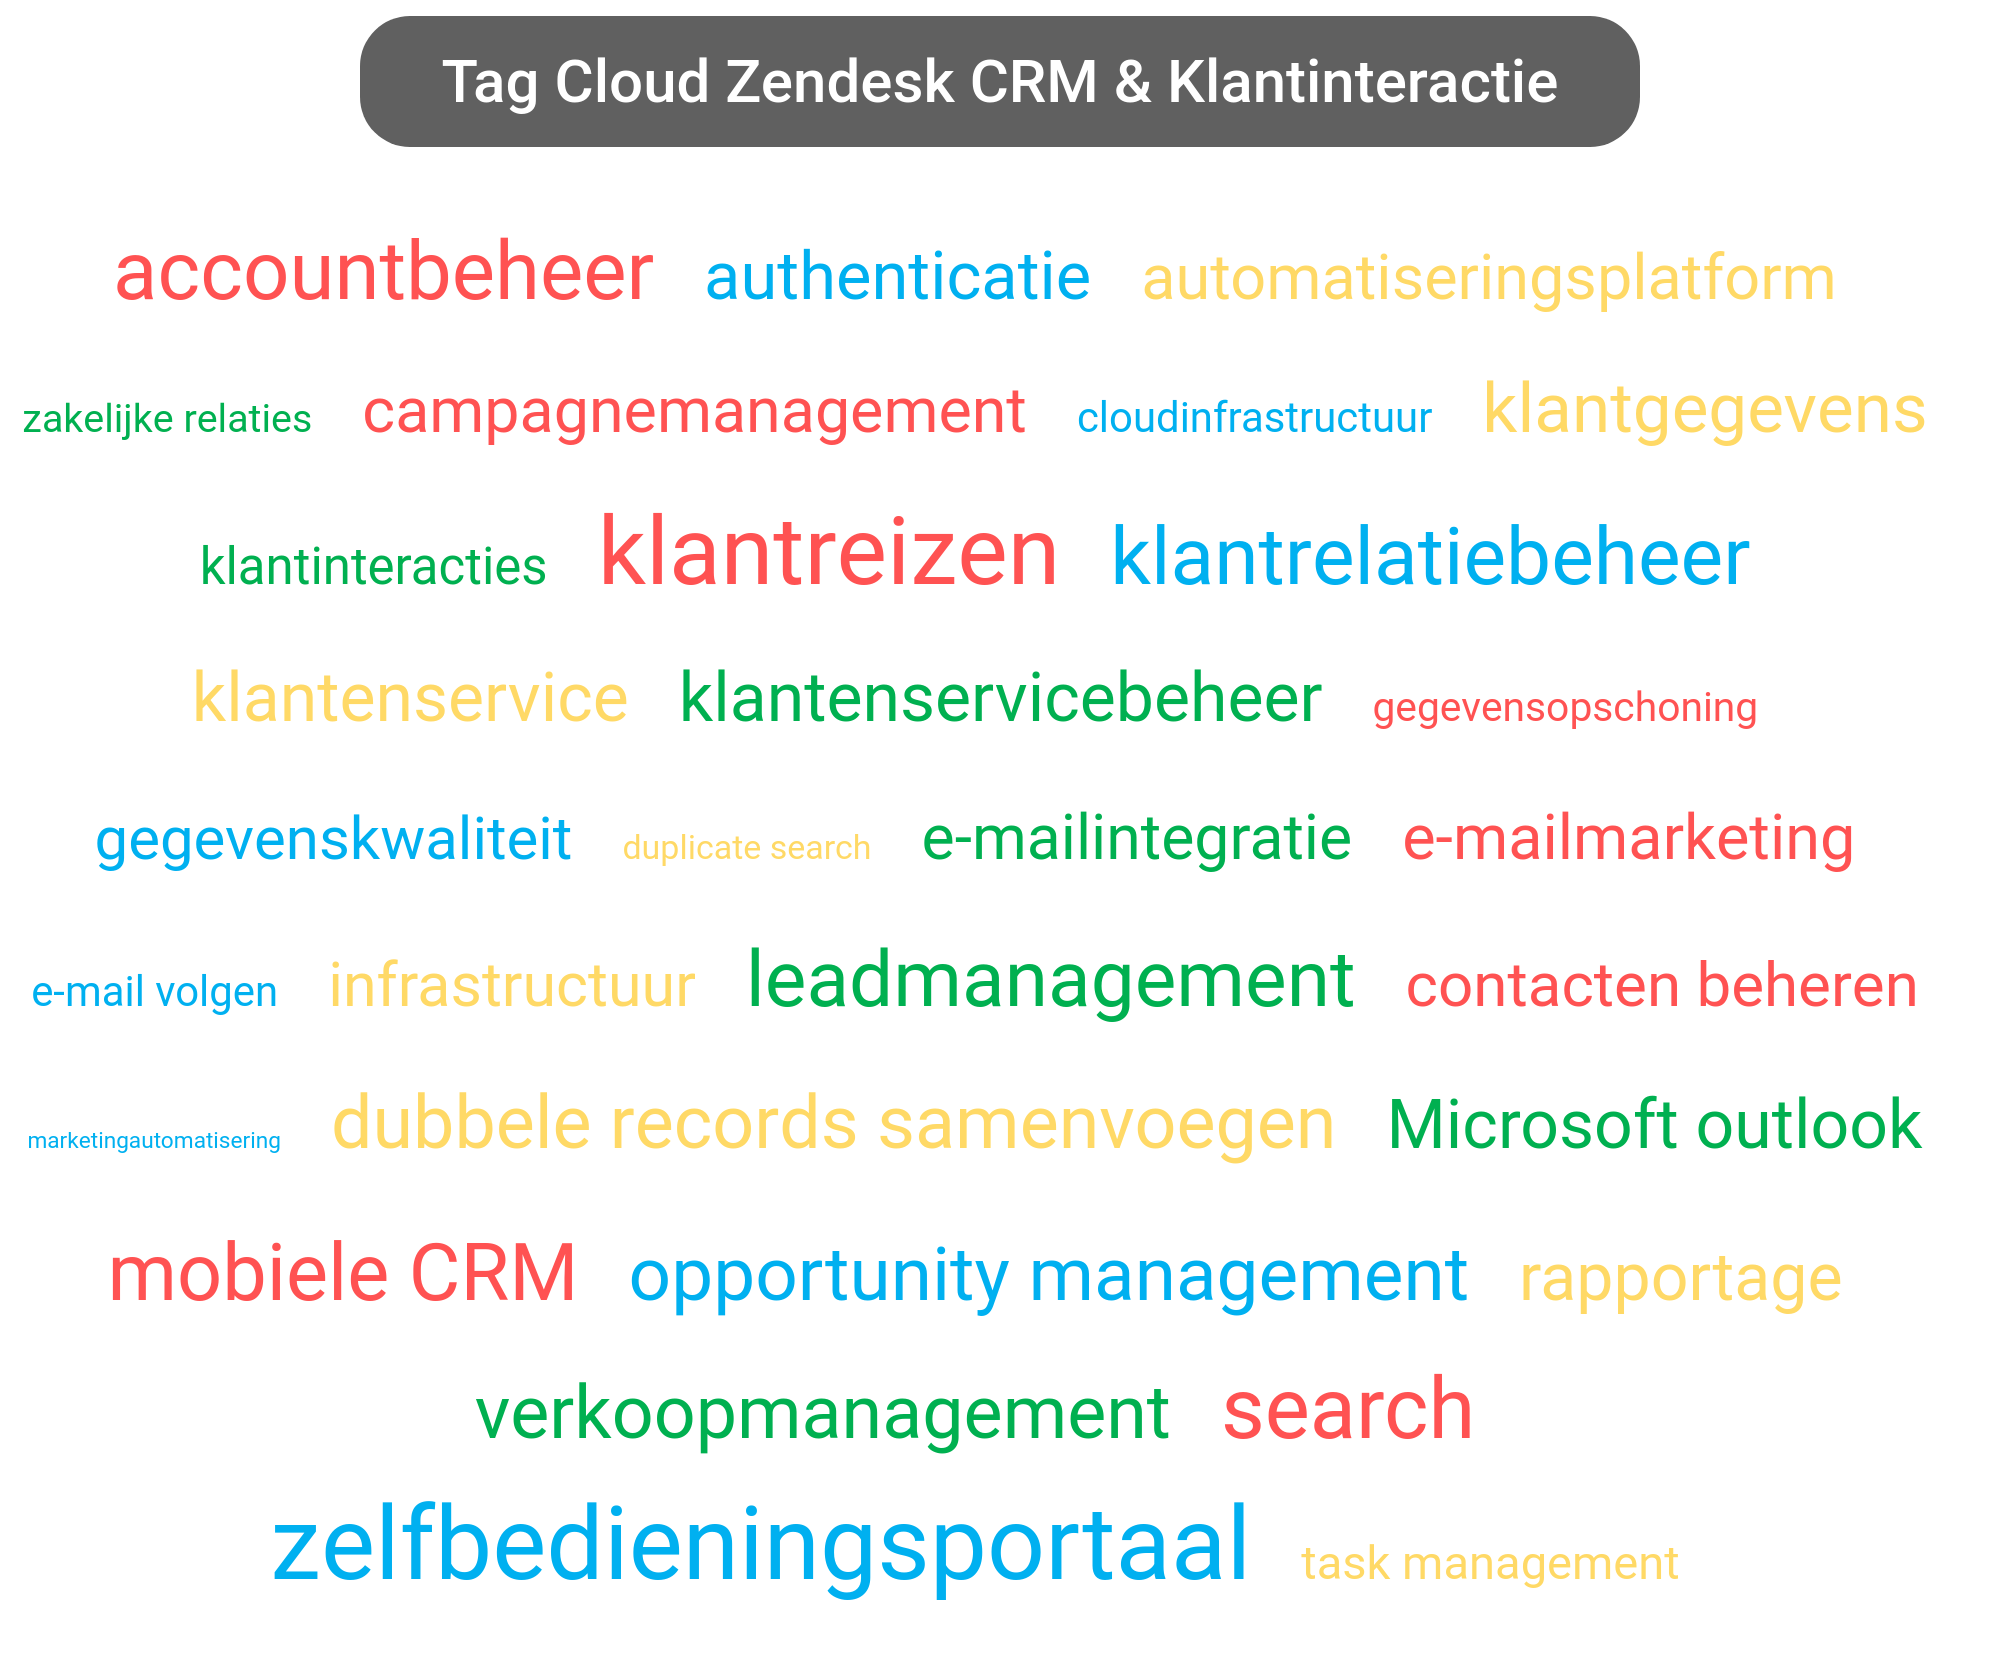 Tag cloud van Zendesk CRM tools.